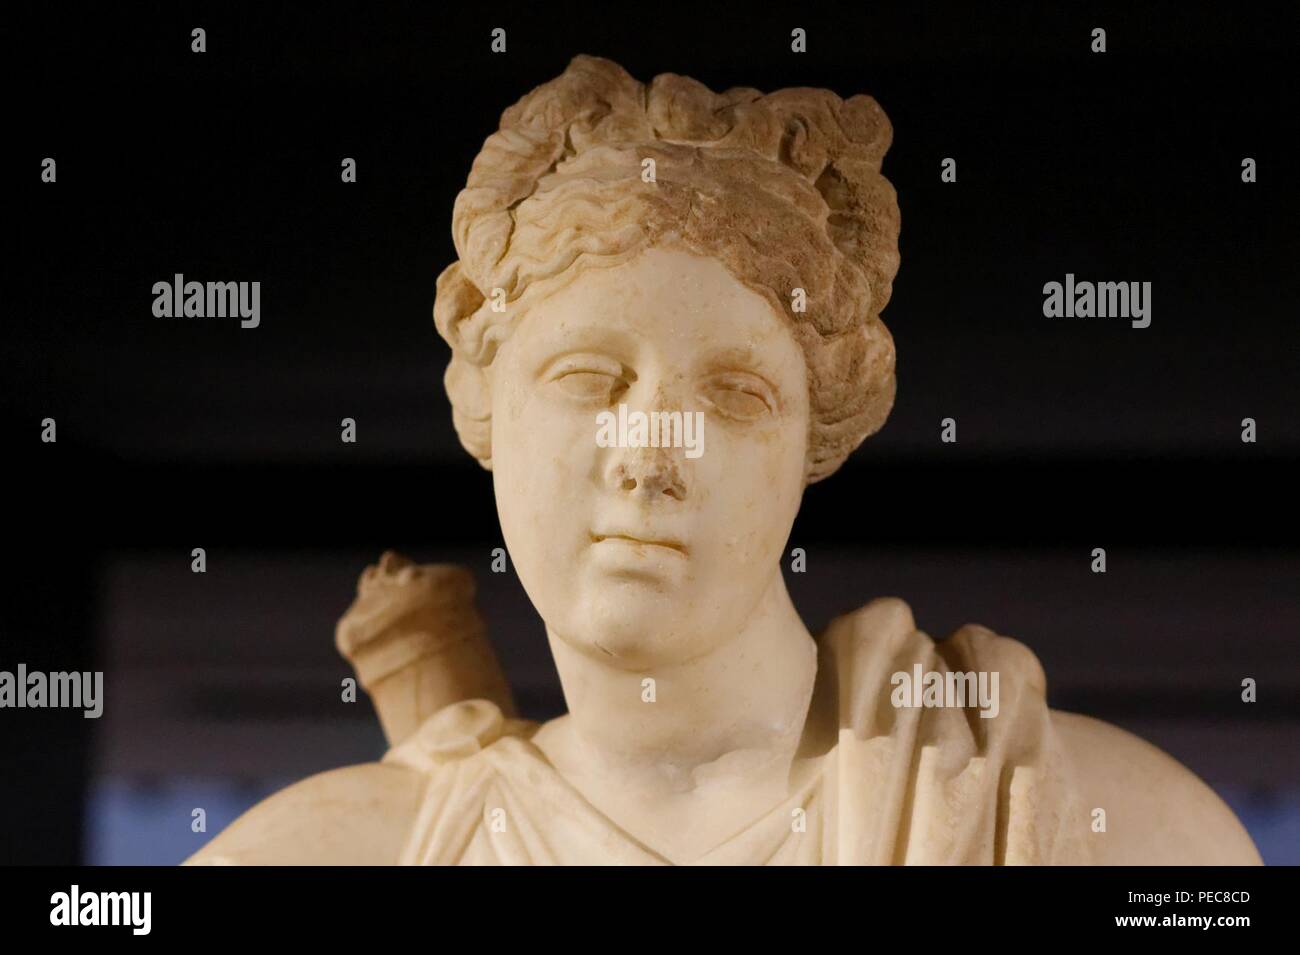 Artemis Louvre Ma2906 n14. Stock Photo